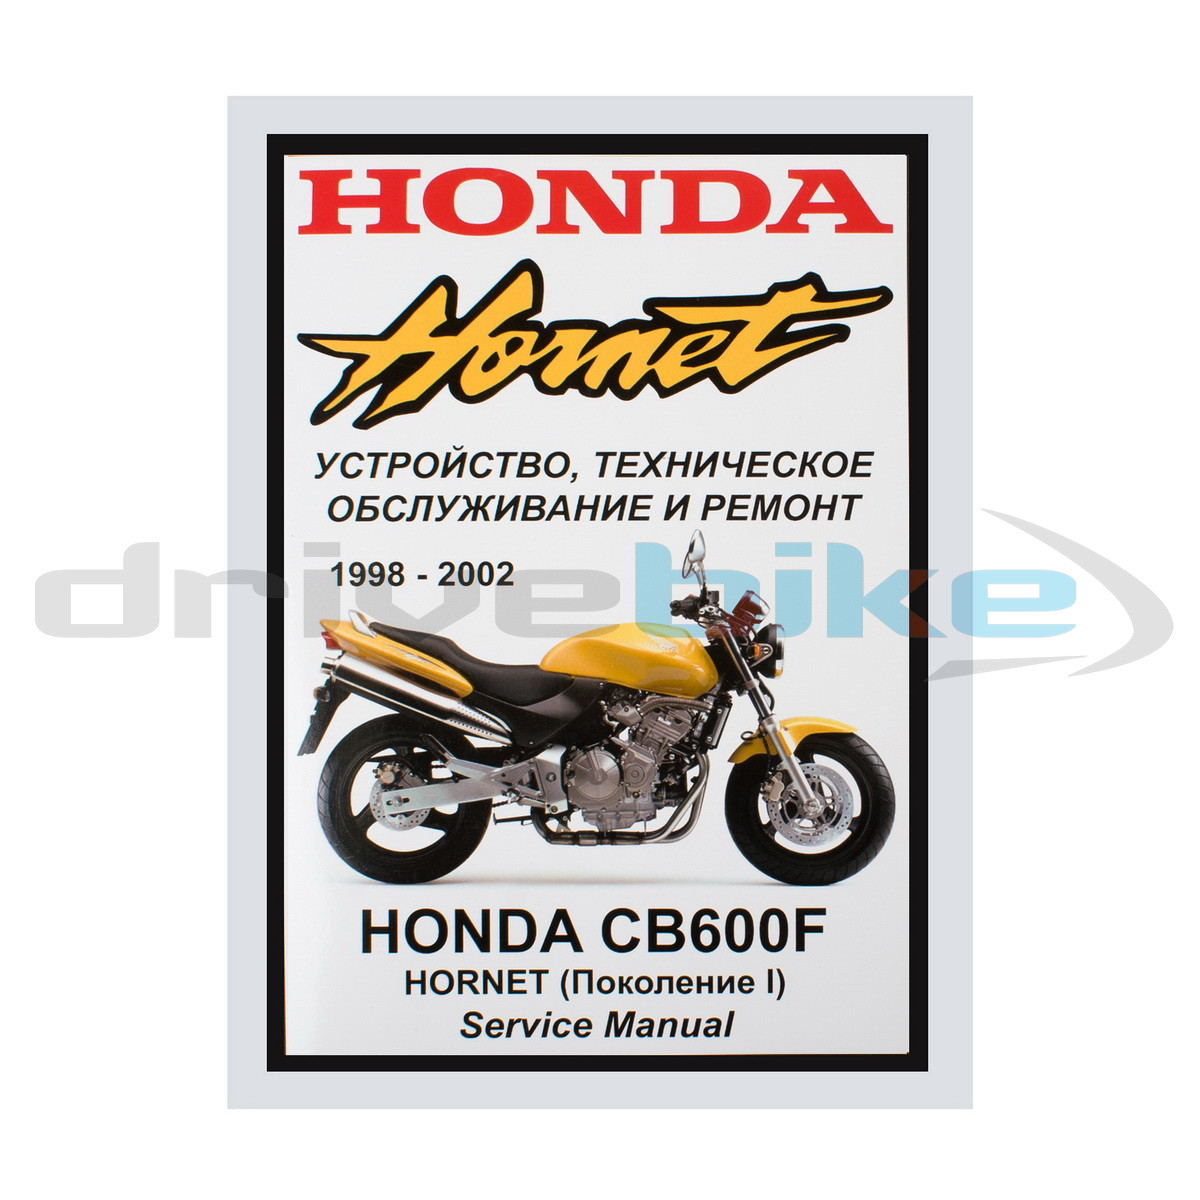 Honda cb 400 sf